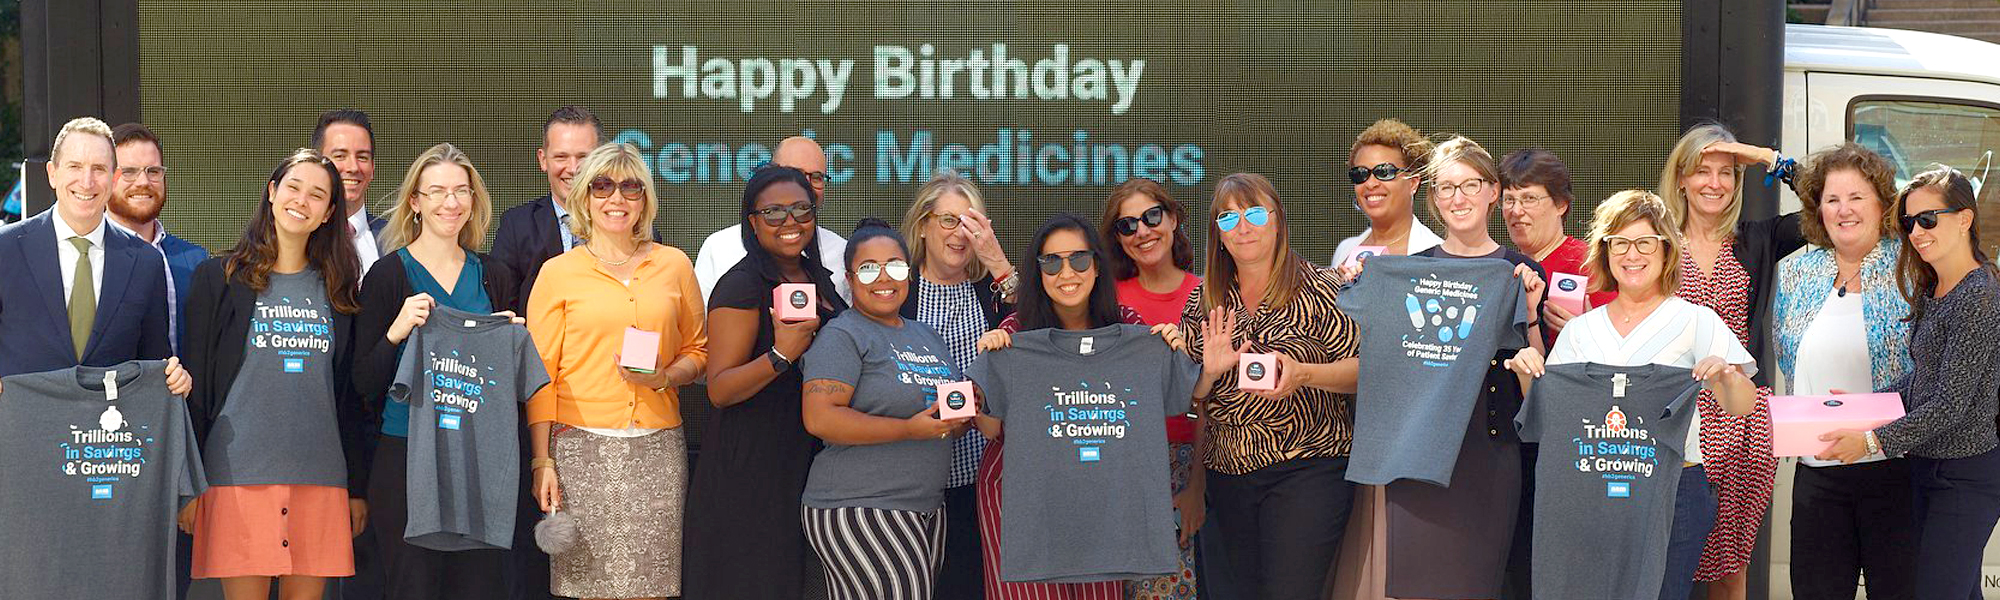 AAM Team celebrates 35th birthday of generic medicines